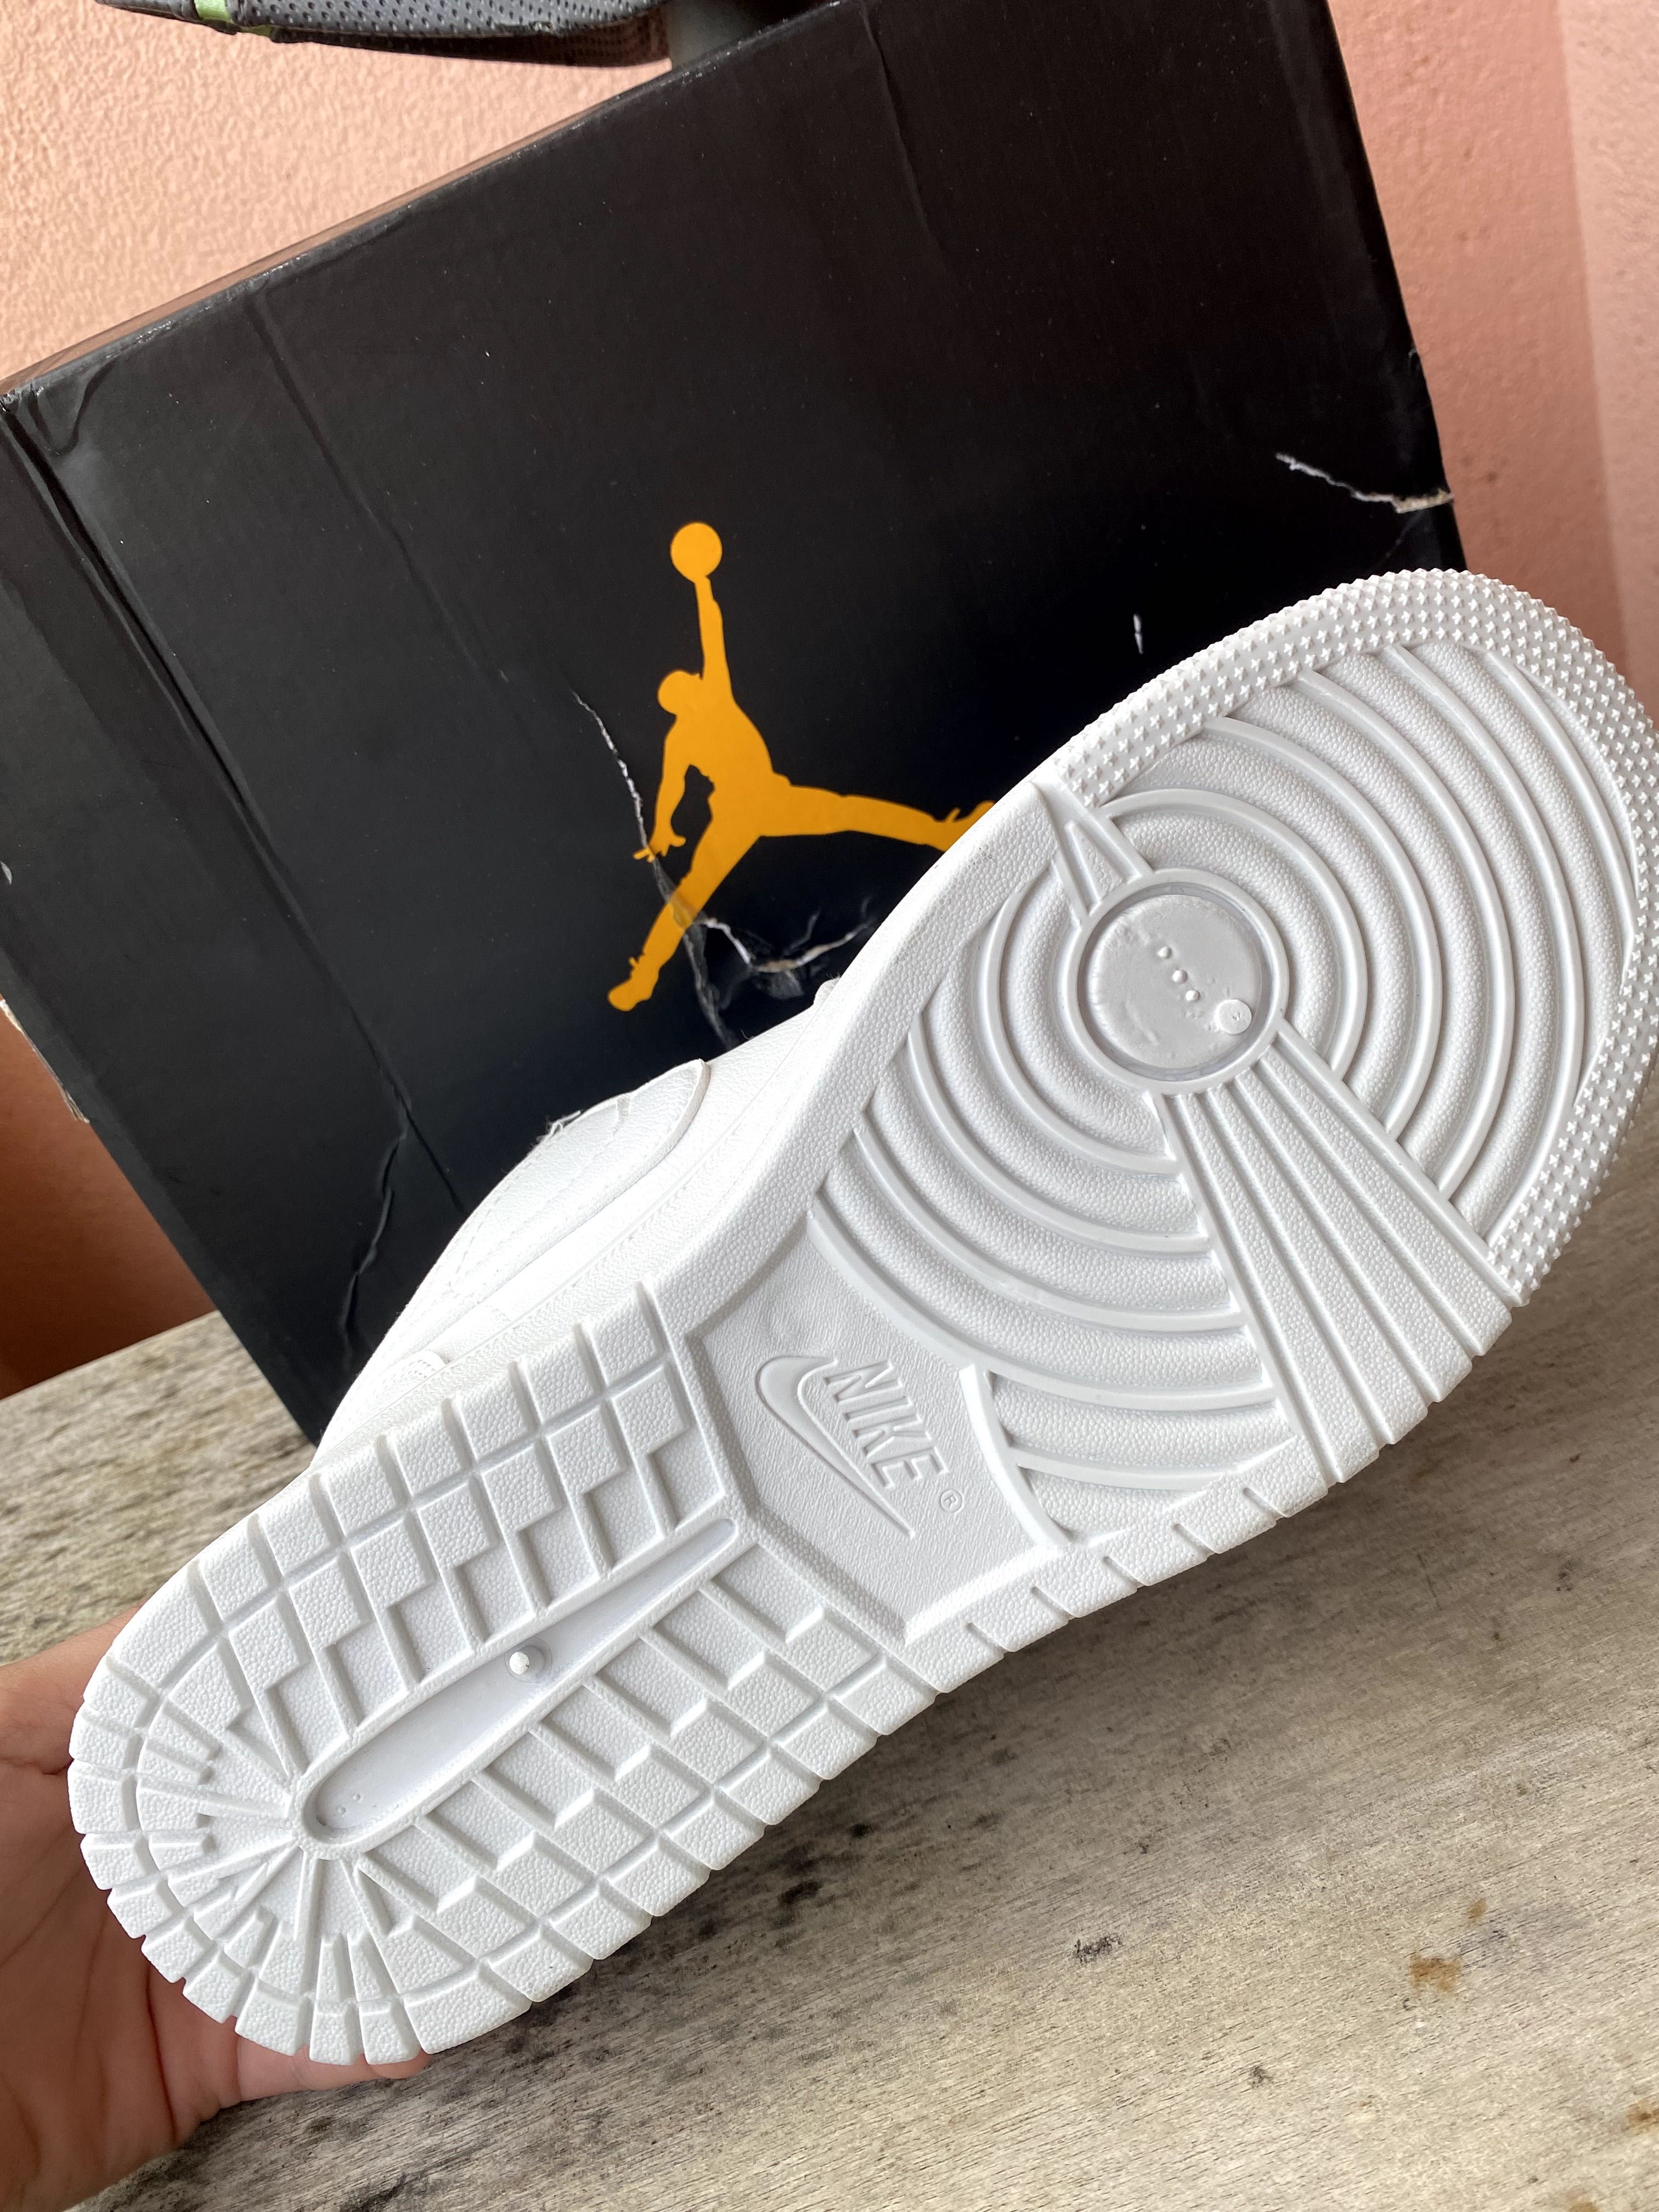 Tênis Nike Jordan todo branco